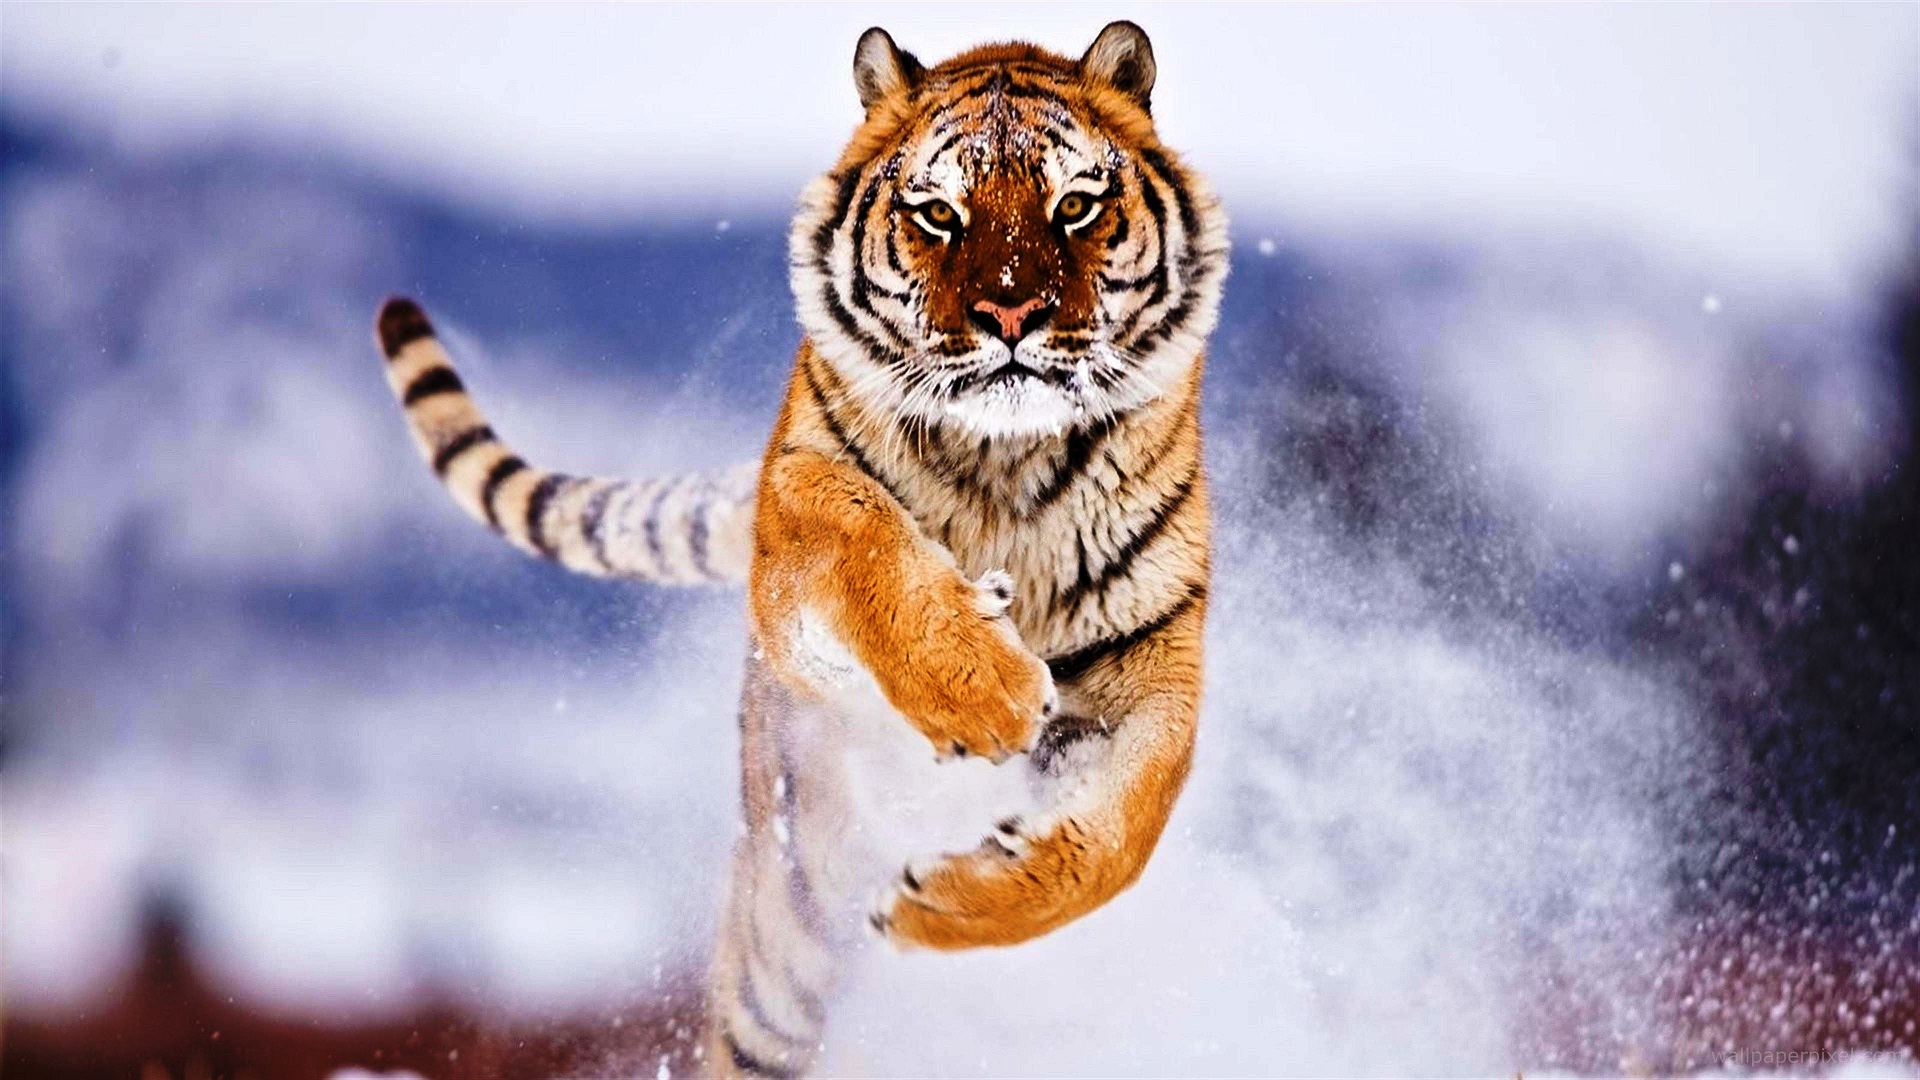 Tiger longest jump nice click camera images - New hd wallpaperNew hd ...